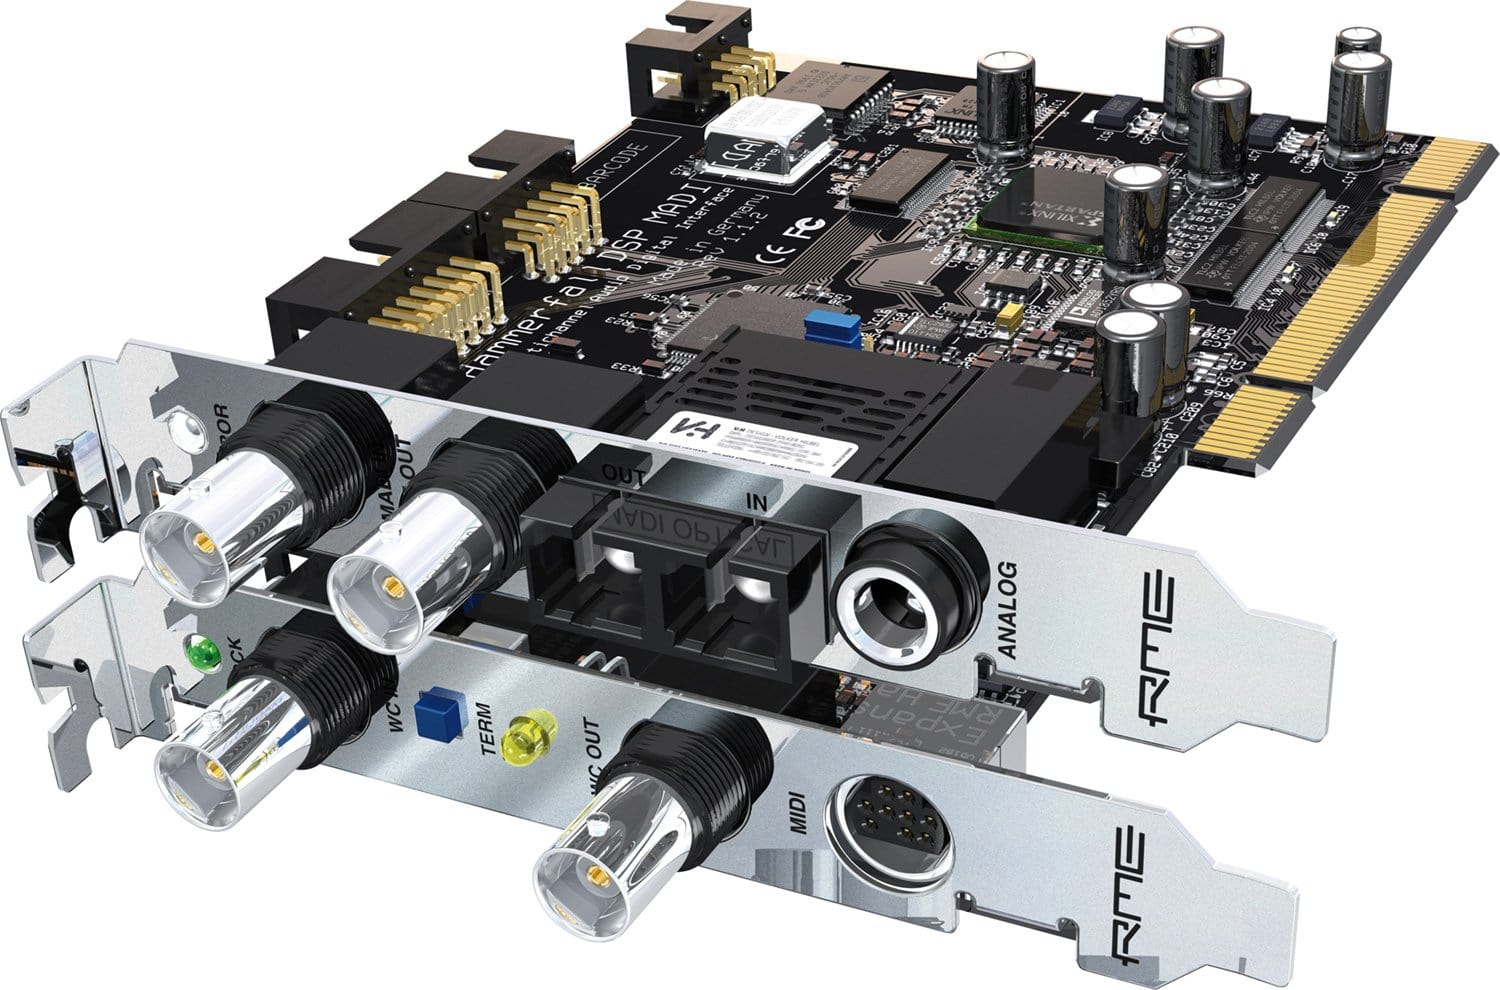 RME HDSPMADI PCI MADI 64-Channel Audio Interface - PSSL ProSound and Stage Lighting